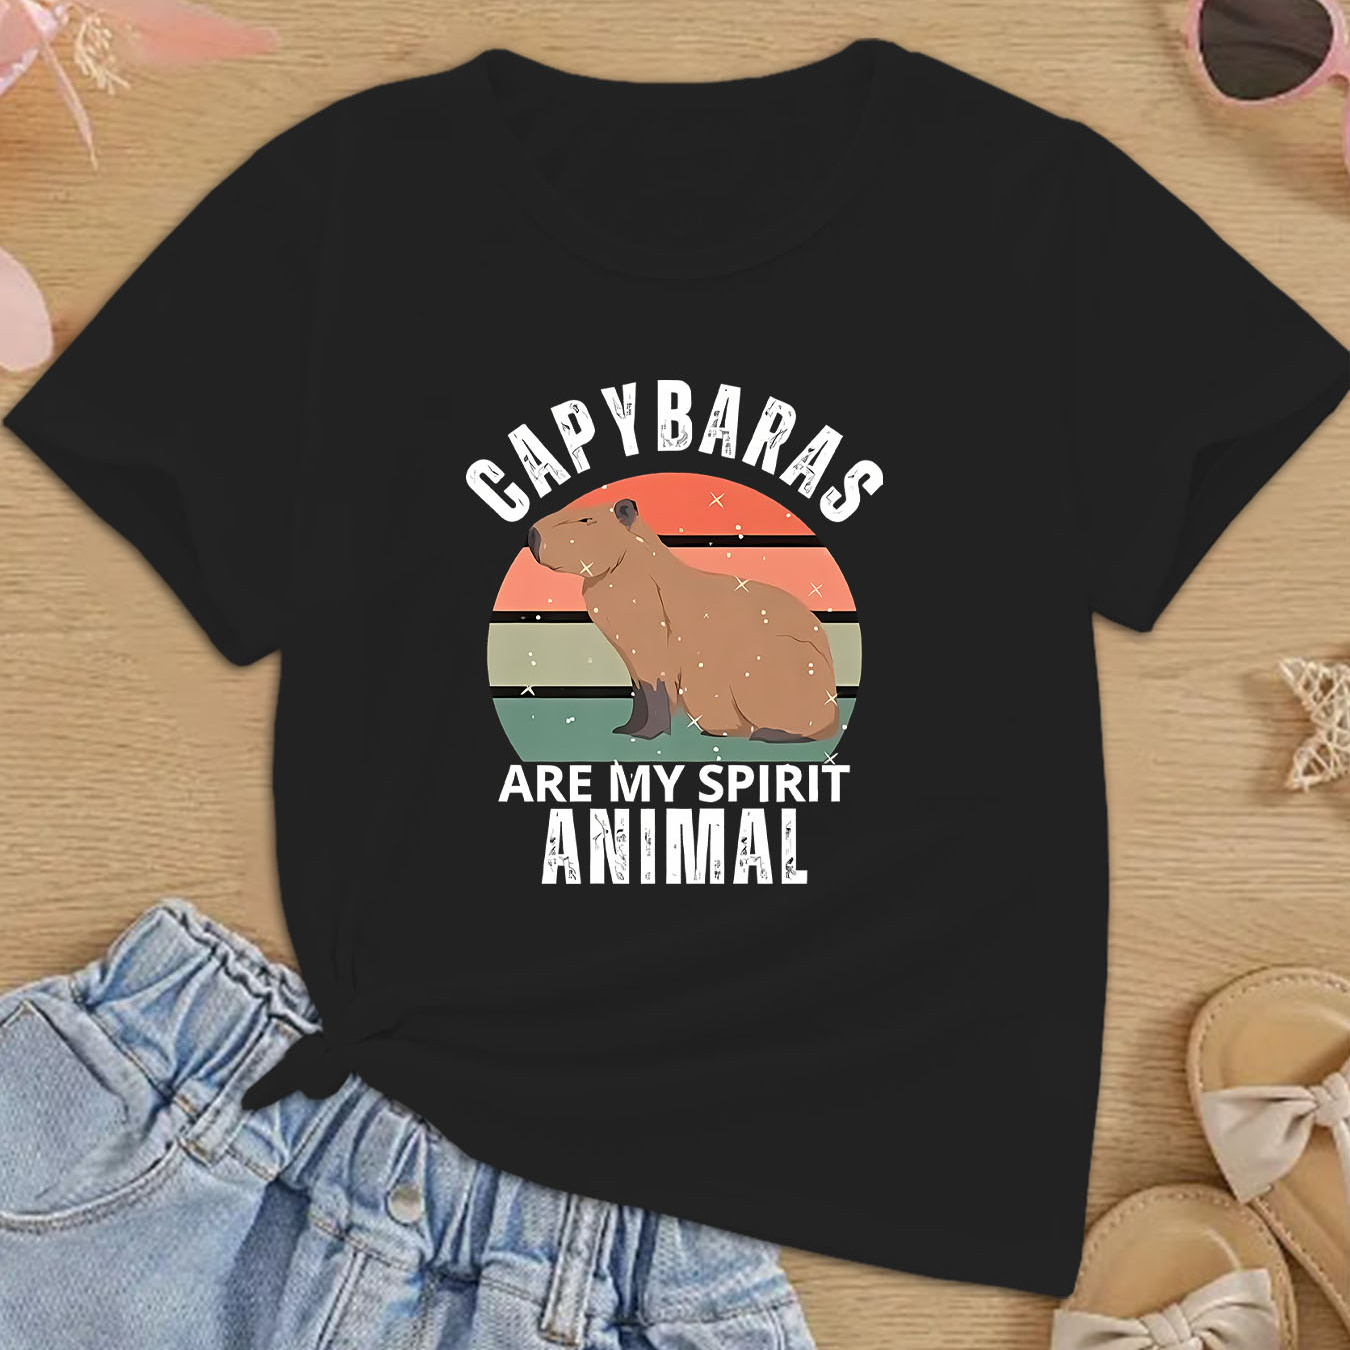 

Girls Casual Crew Neck Cartoon Capybaras Are My Spirit Animal Letter Print Short Sleeve T-shirt, Fashion Summer Top For Girls, Soft Fabric